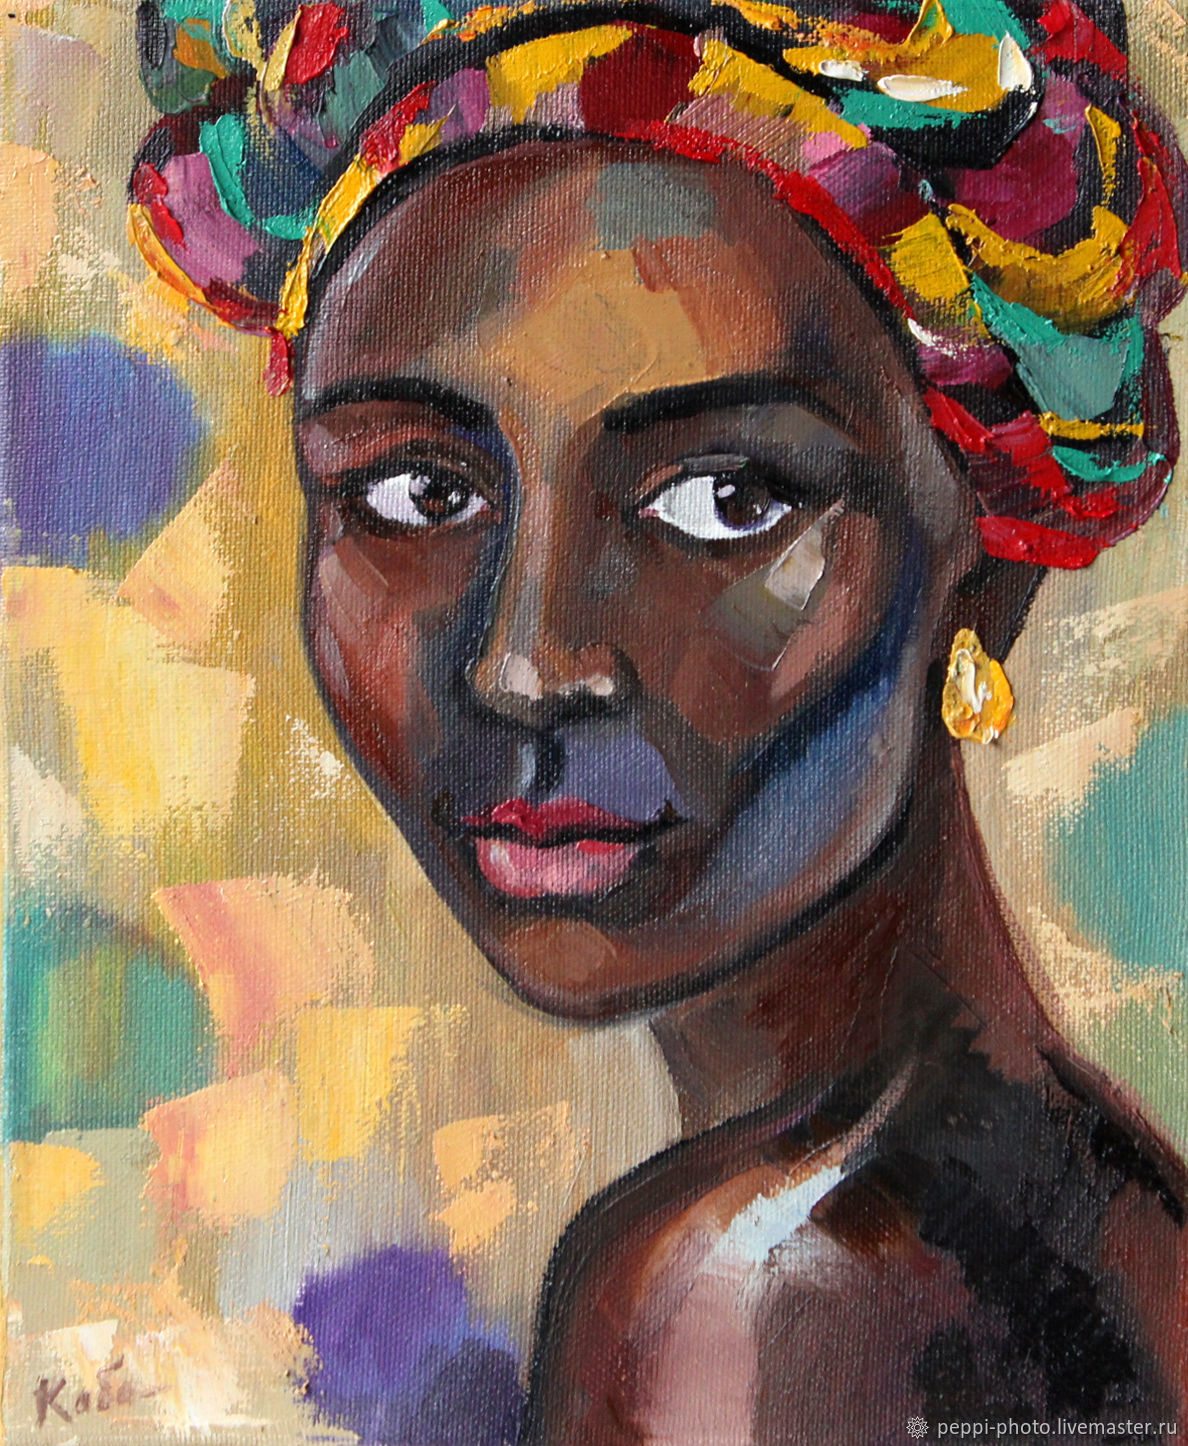 Картина негритянка. Портрет африканки. Портрет негритянки. Портрет африканской женщины. Портреты африканок живопись.